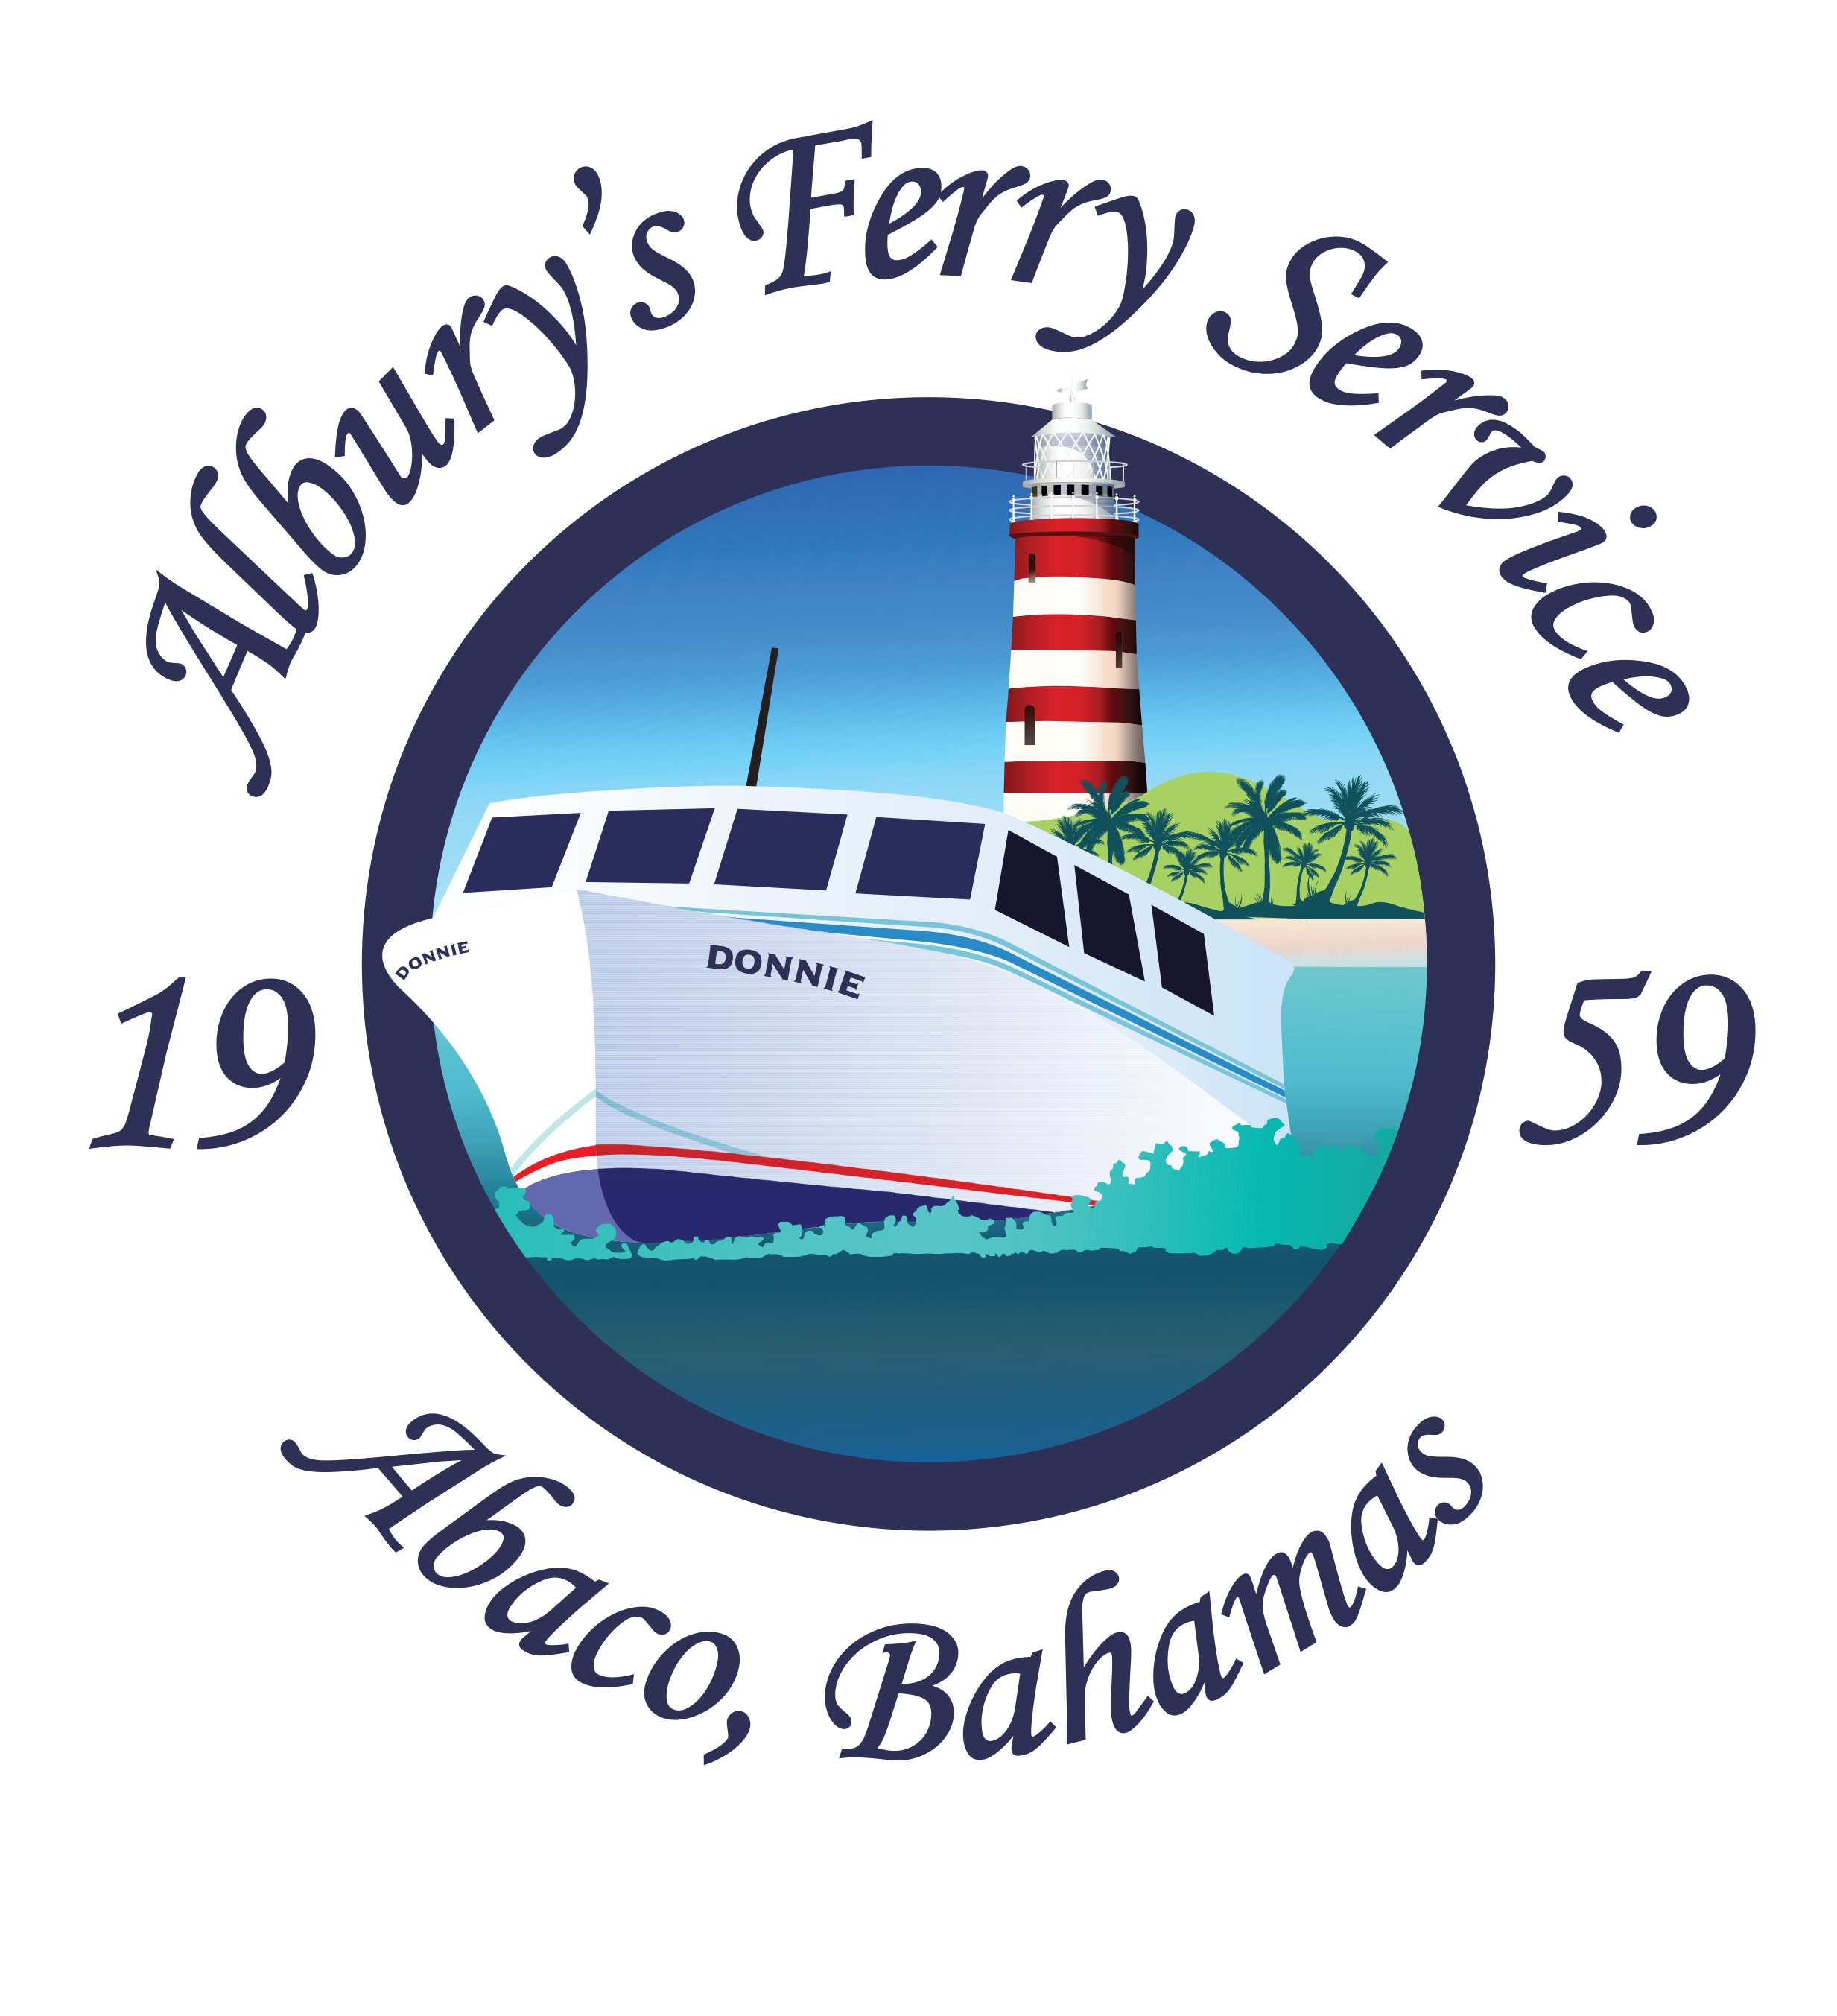 Alburys Ferry Service